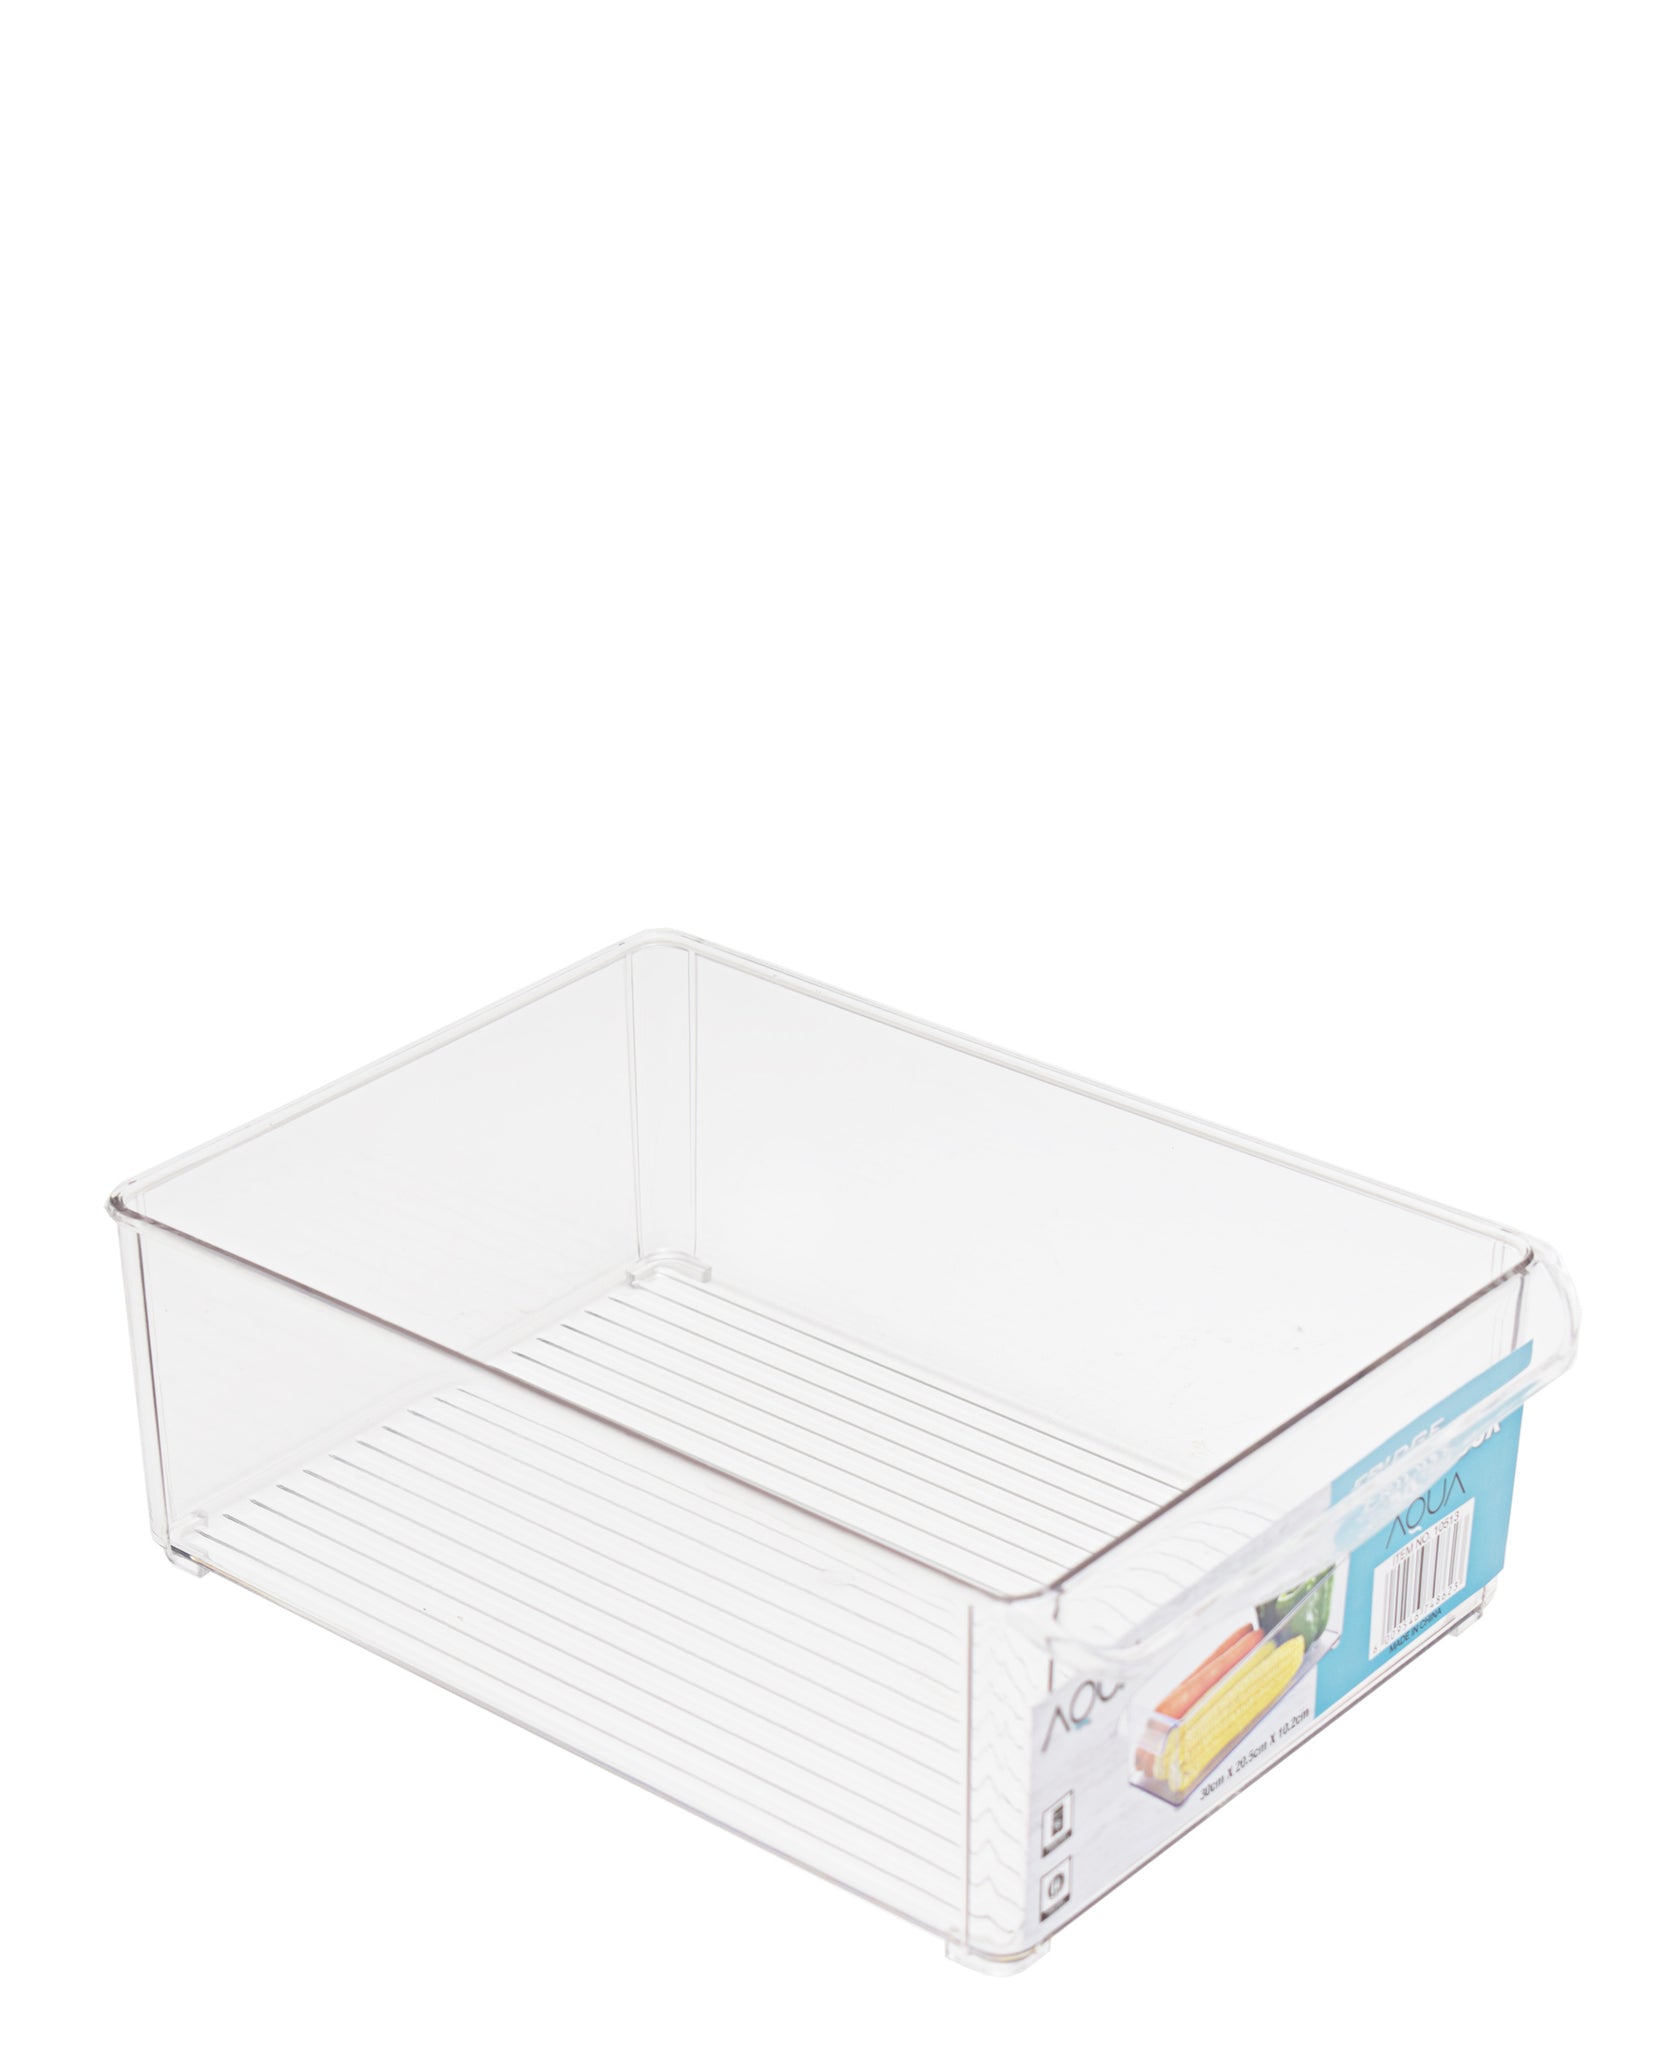 Aqua Fridge Storage Box 30cm - Clear